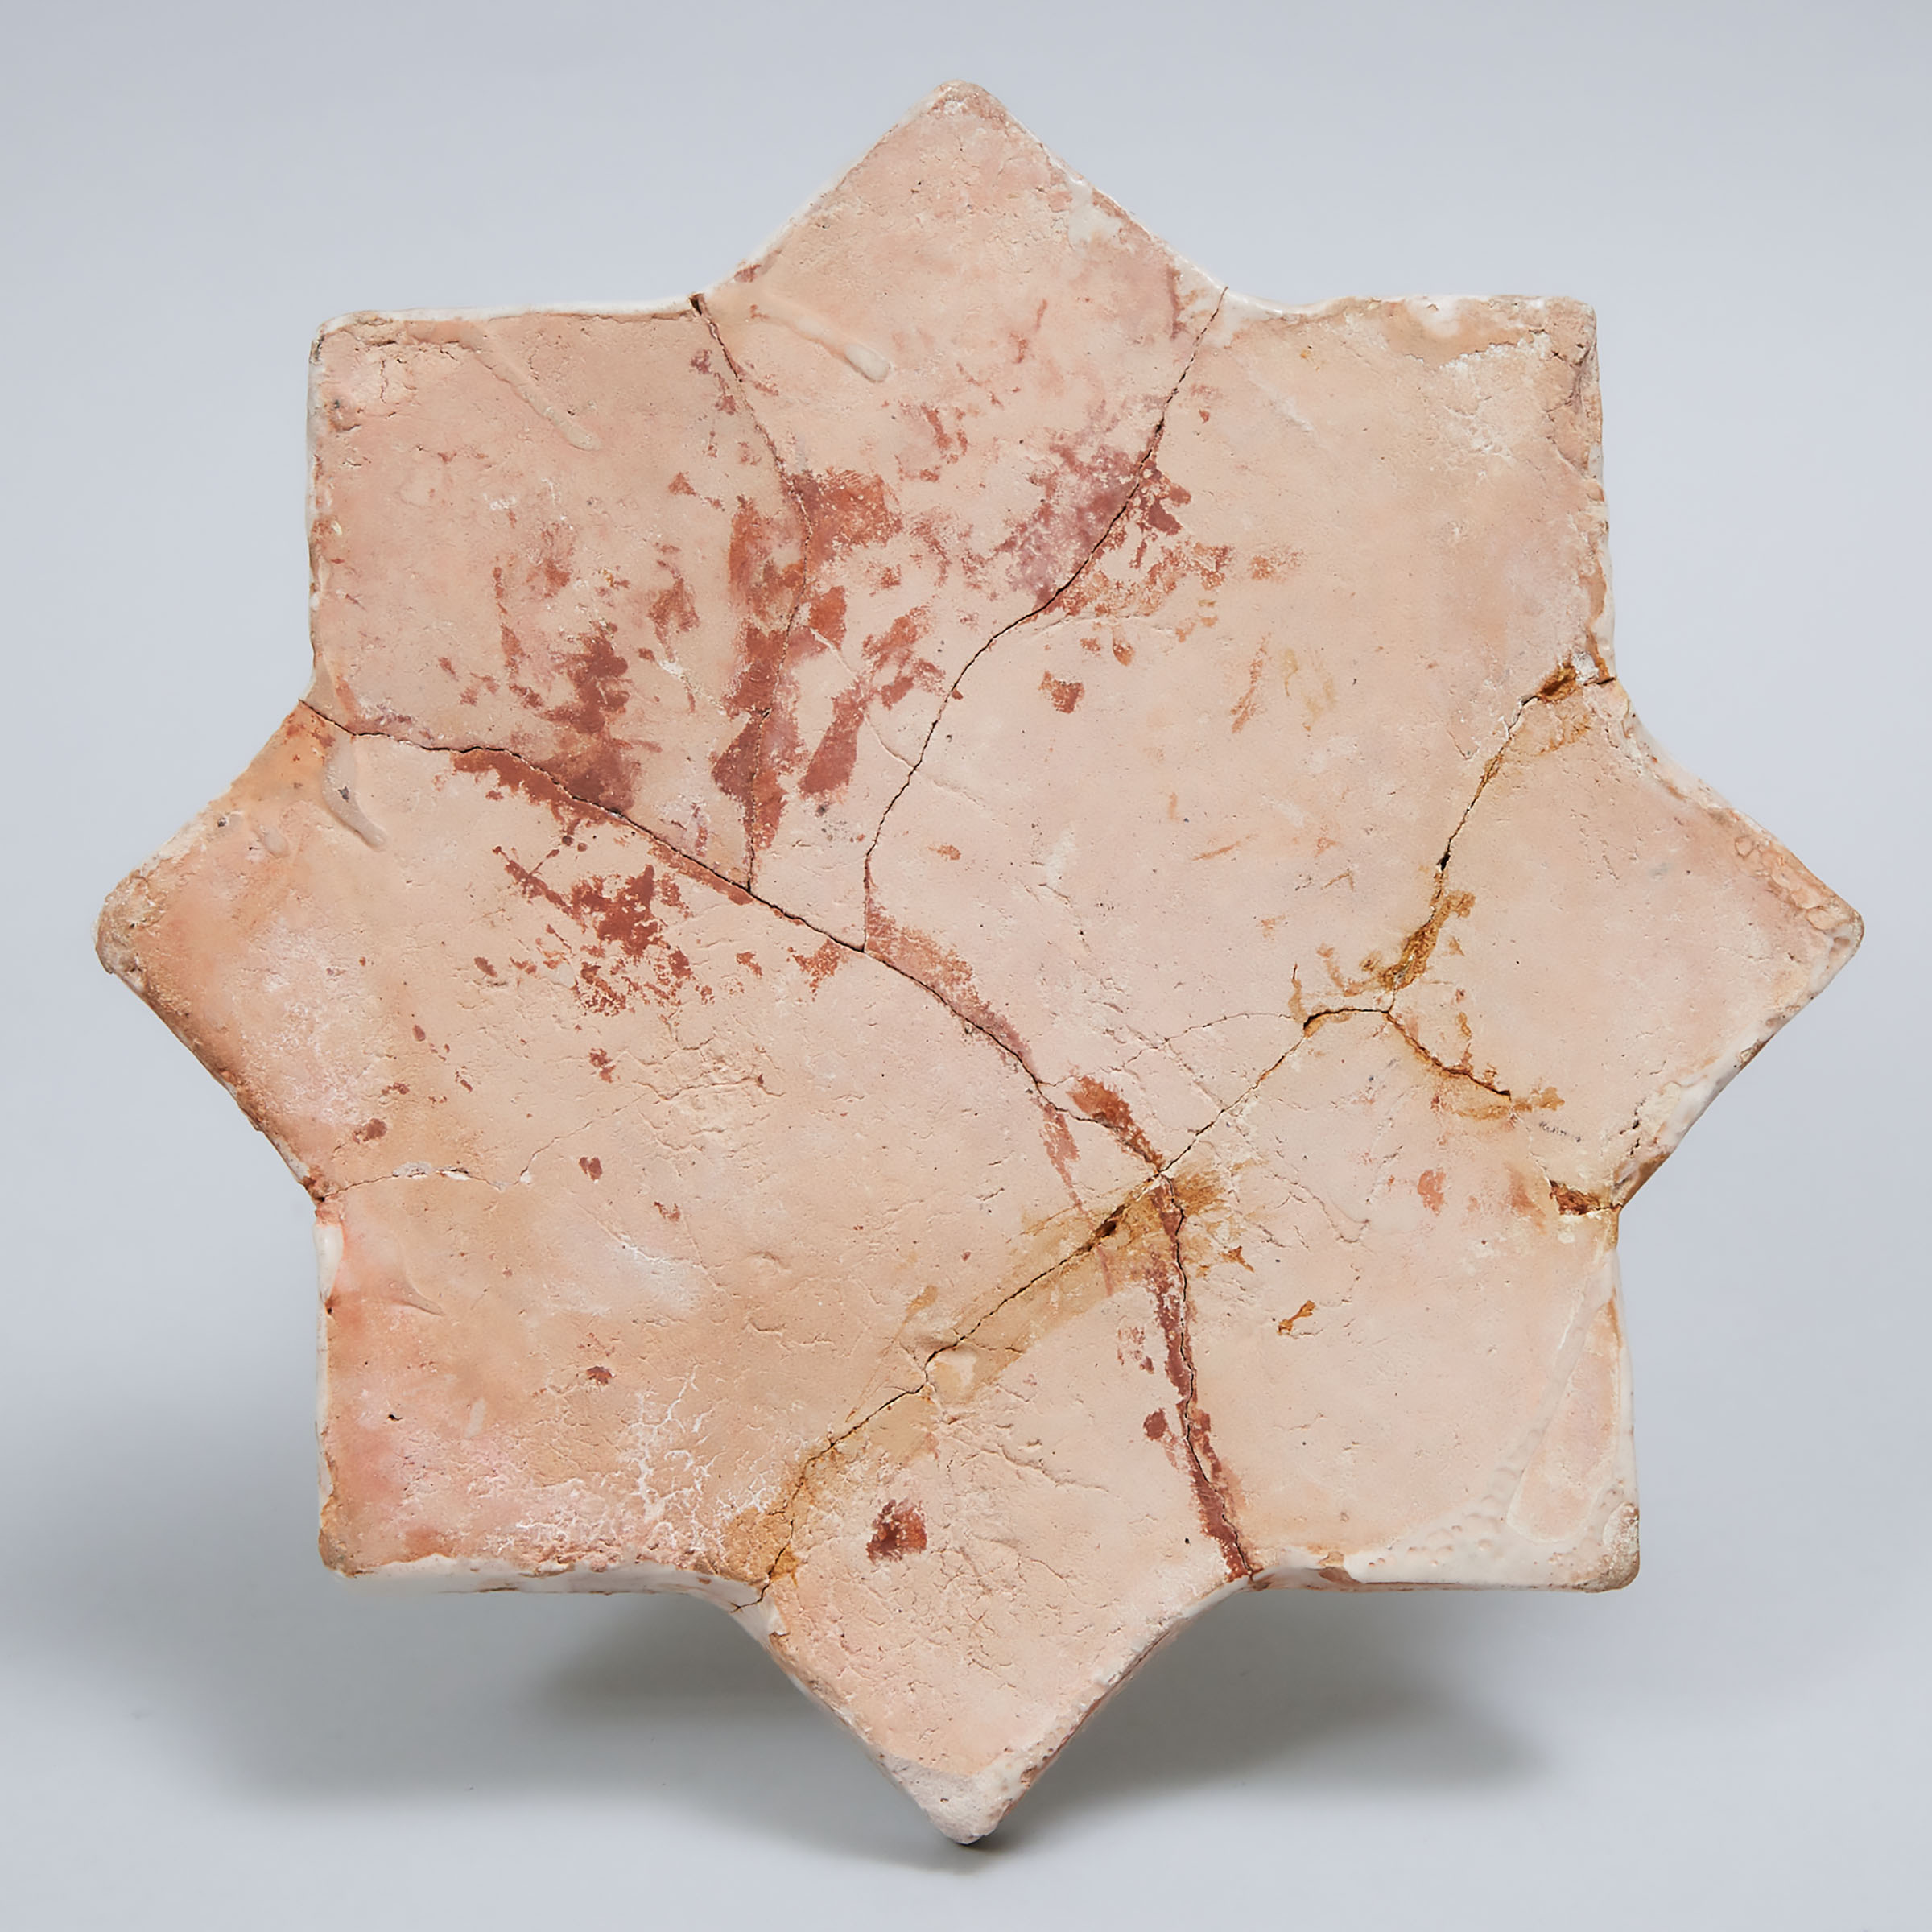 Kāshān Lustre Pottery Star Tile, Persia, 12th/13th century